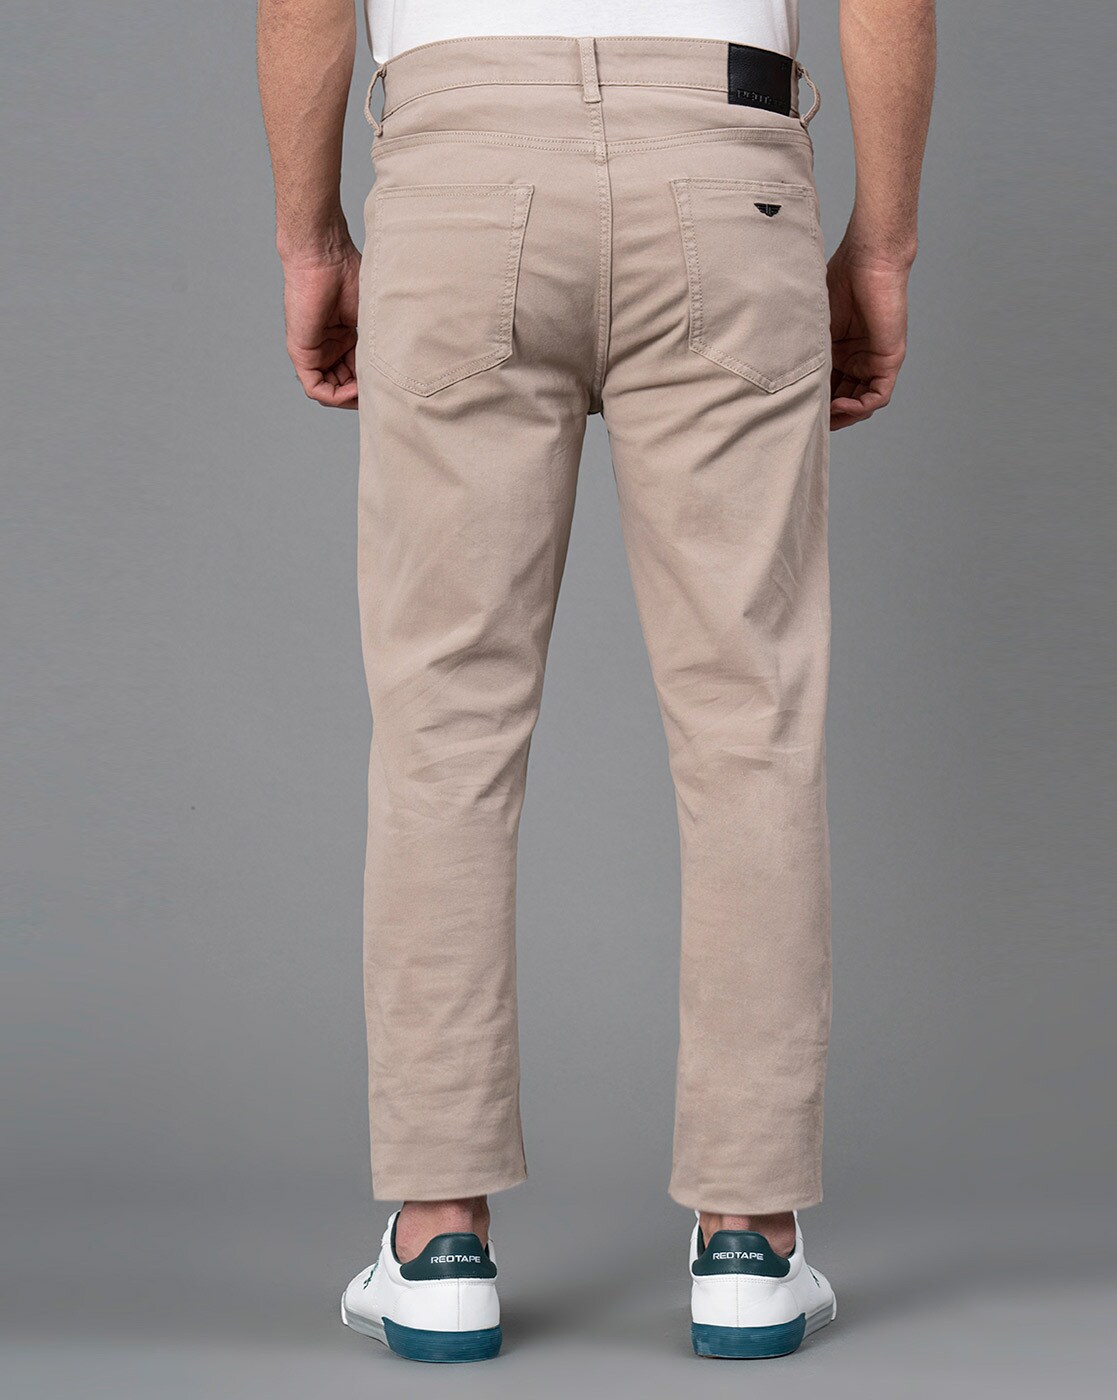 Vero Moda Jeans Women's Size 2 Denim Pants (160/64A) | eBay